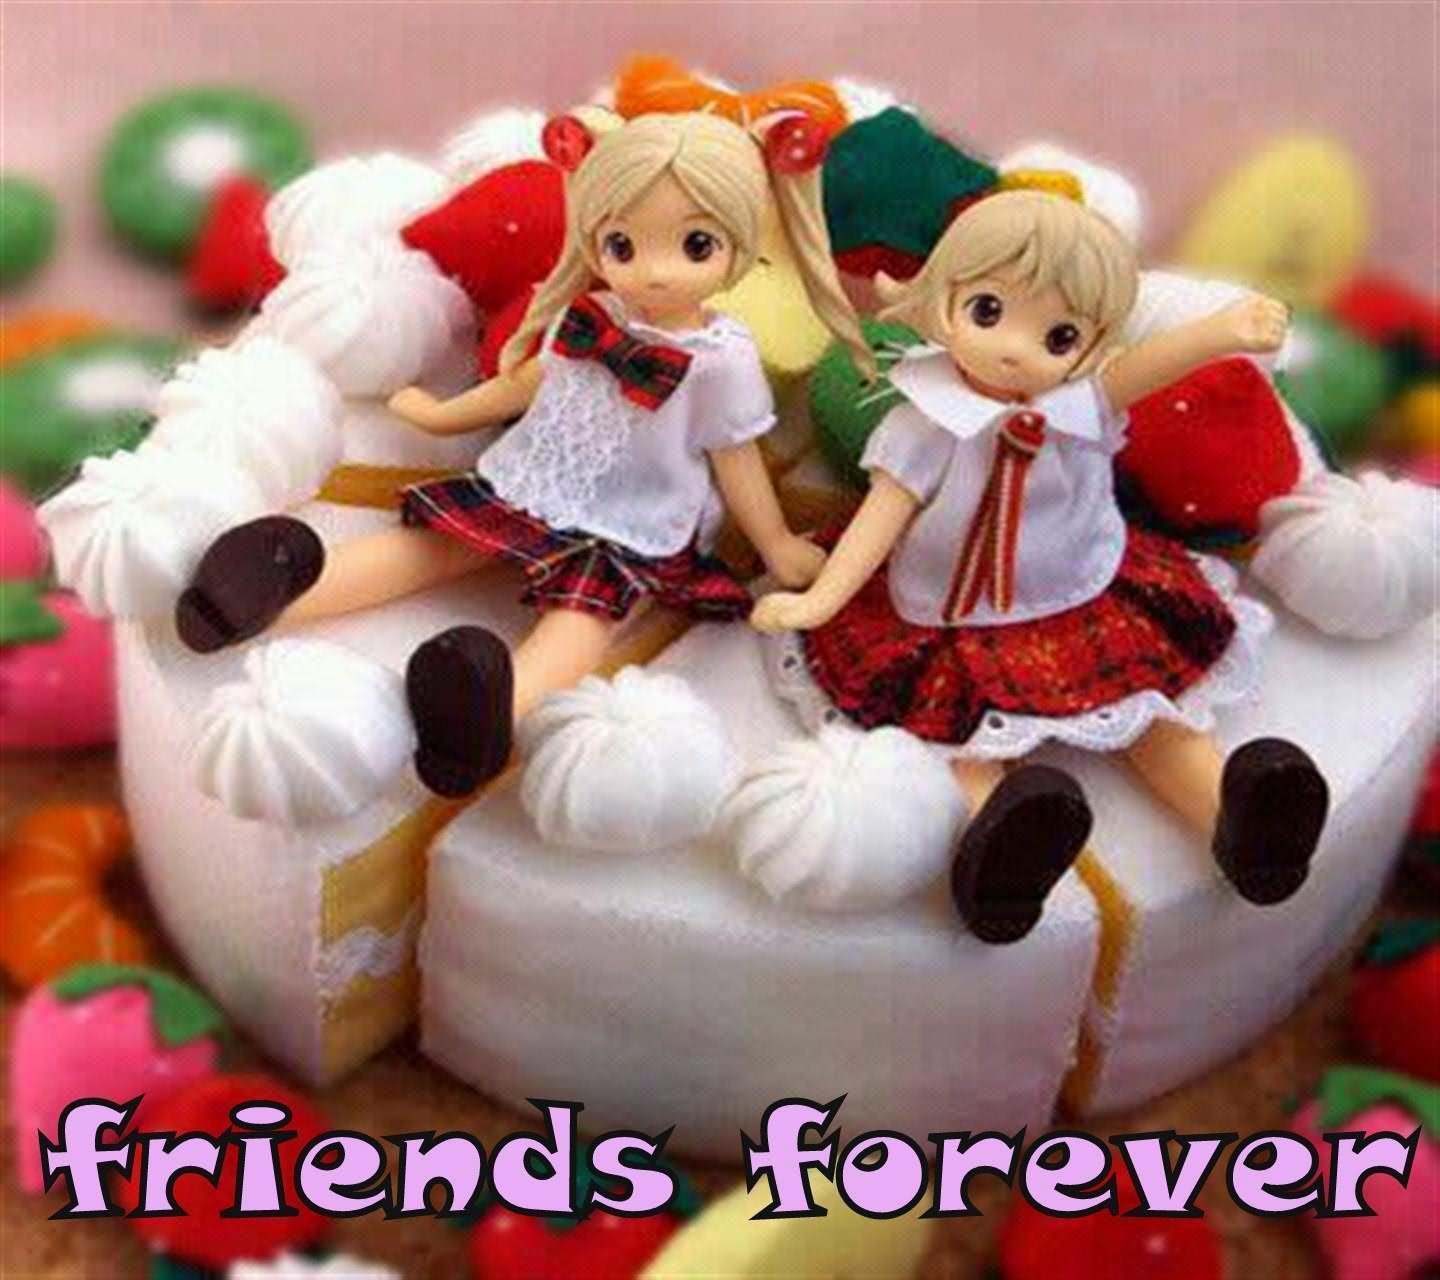 Friends Forever HD Wallpaper